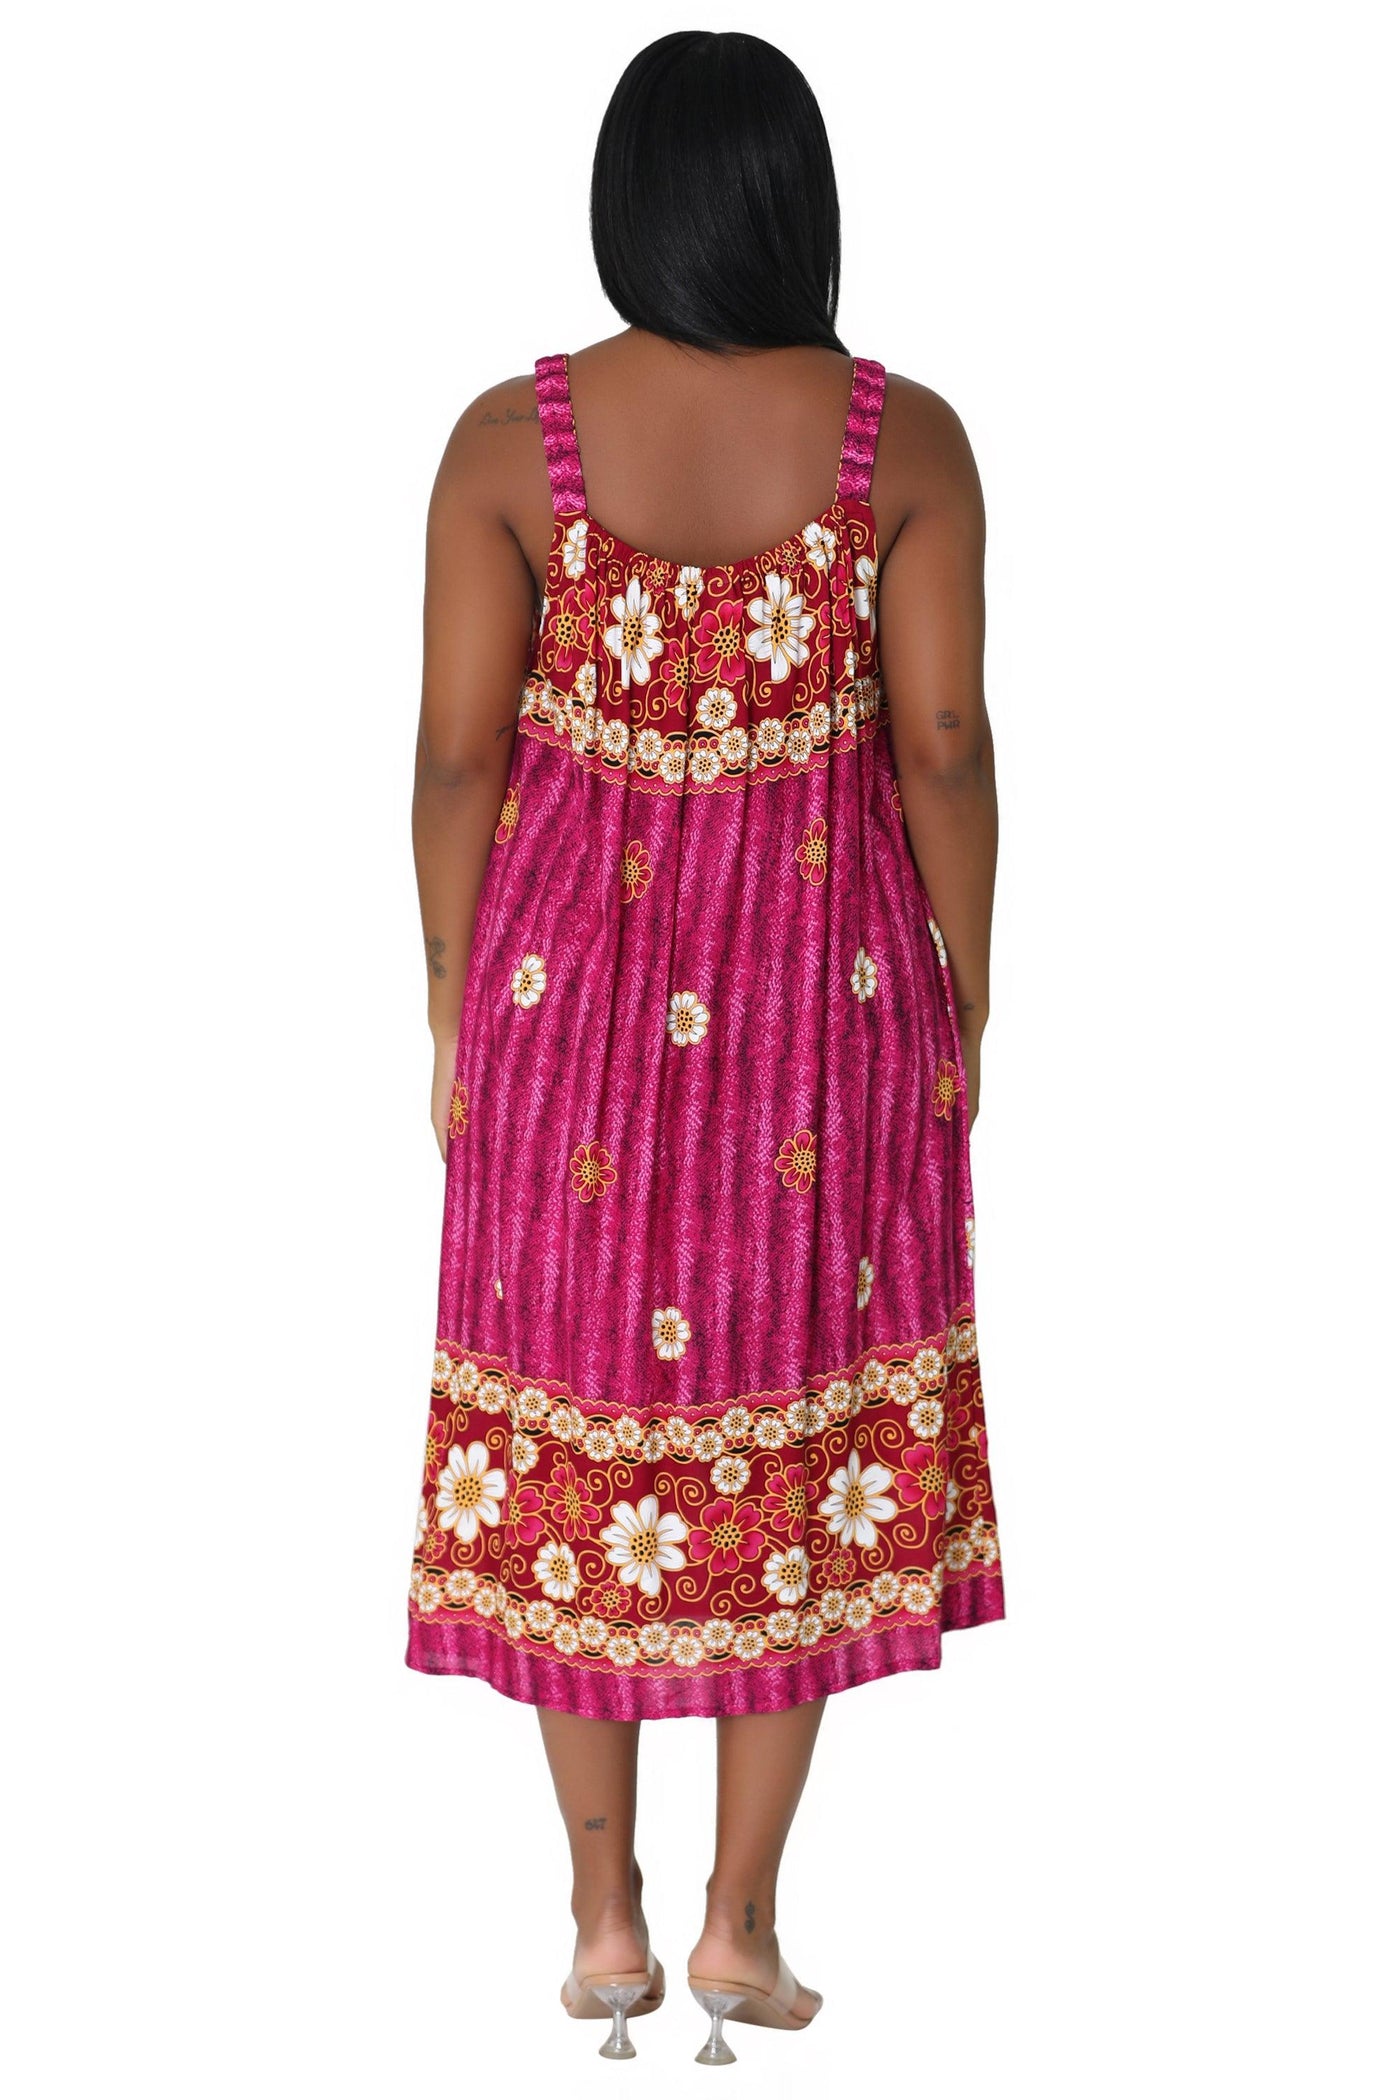 Sunflower Print Resort Dress TH-2027A  - Advance Apparels Inc